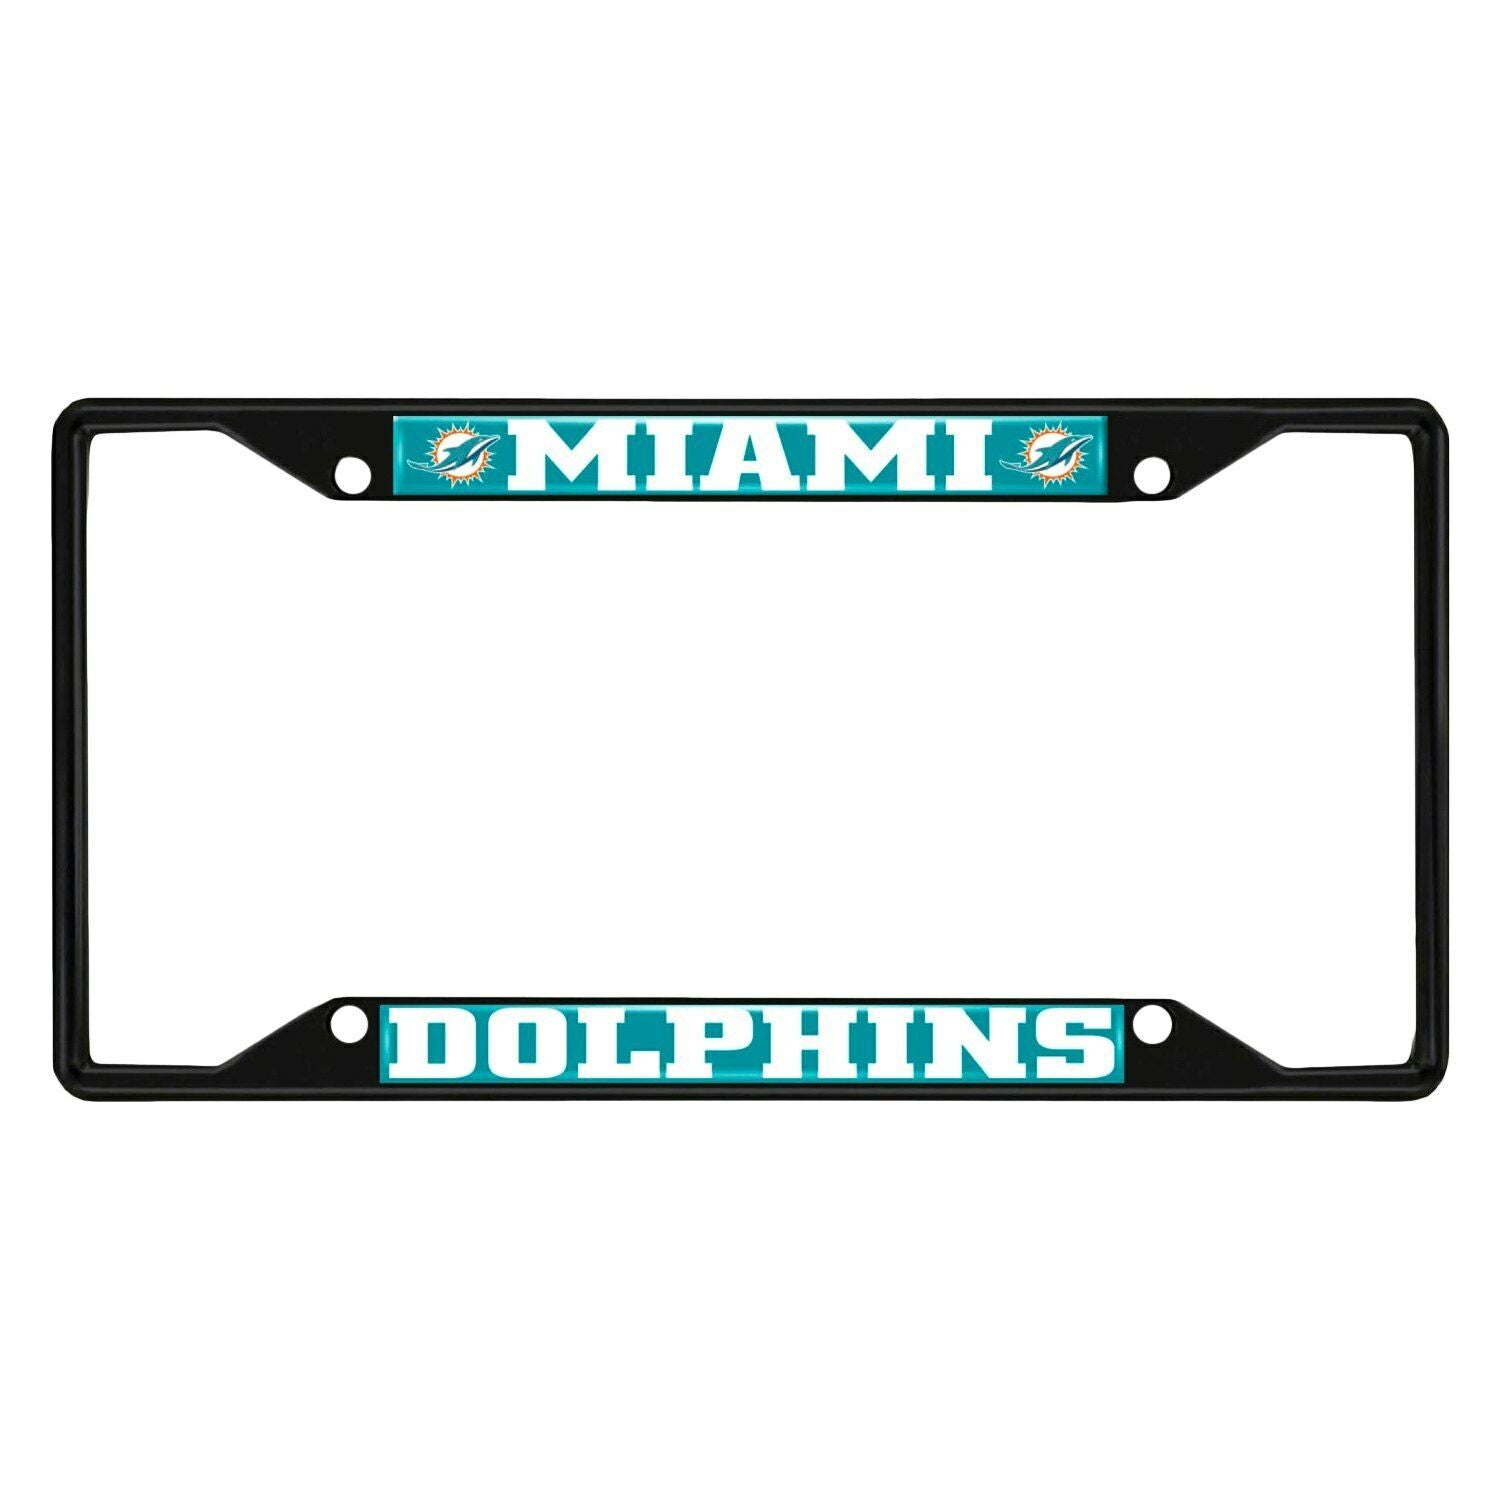 Miami Dolphins License Plate Frame 6.25"x12.25" - Black